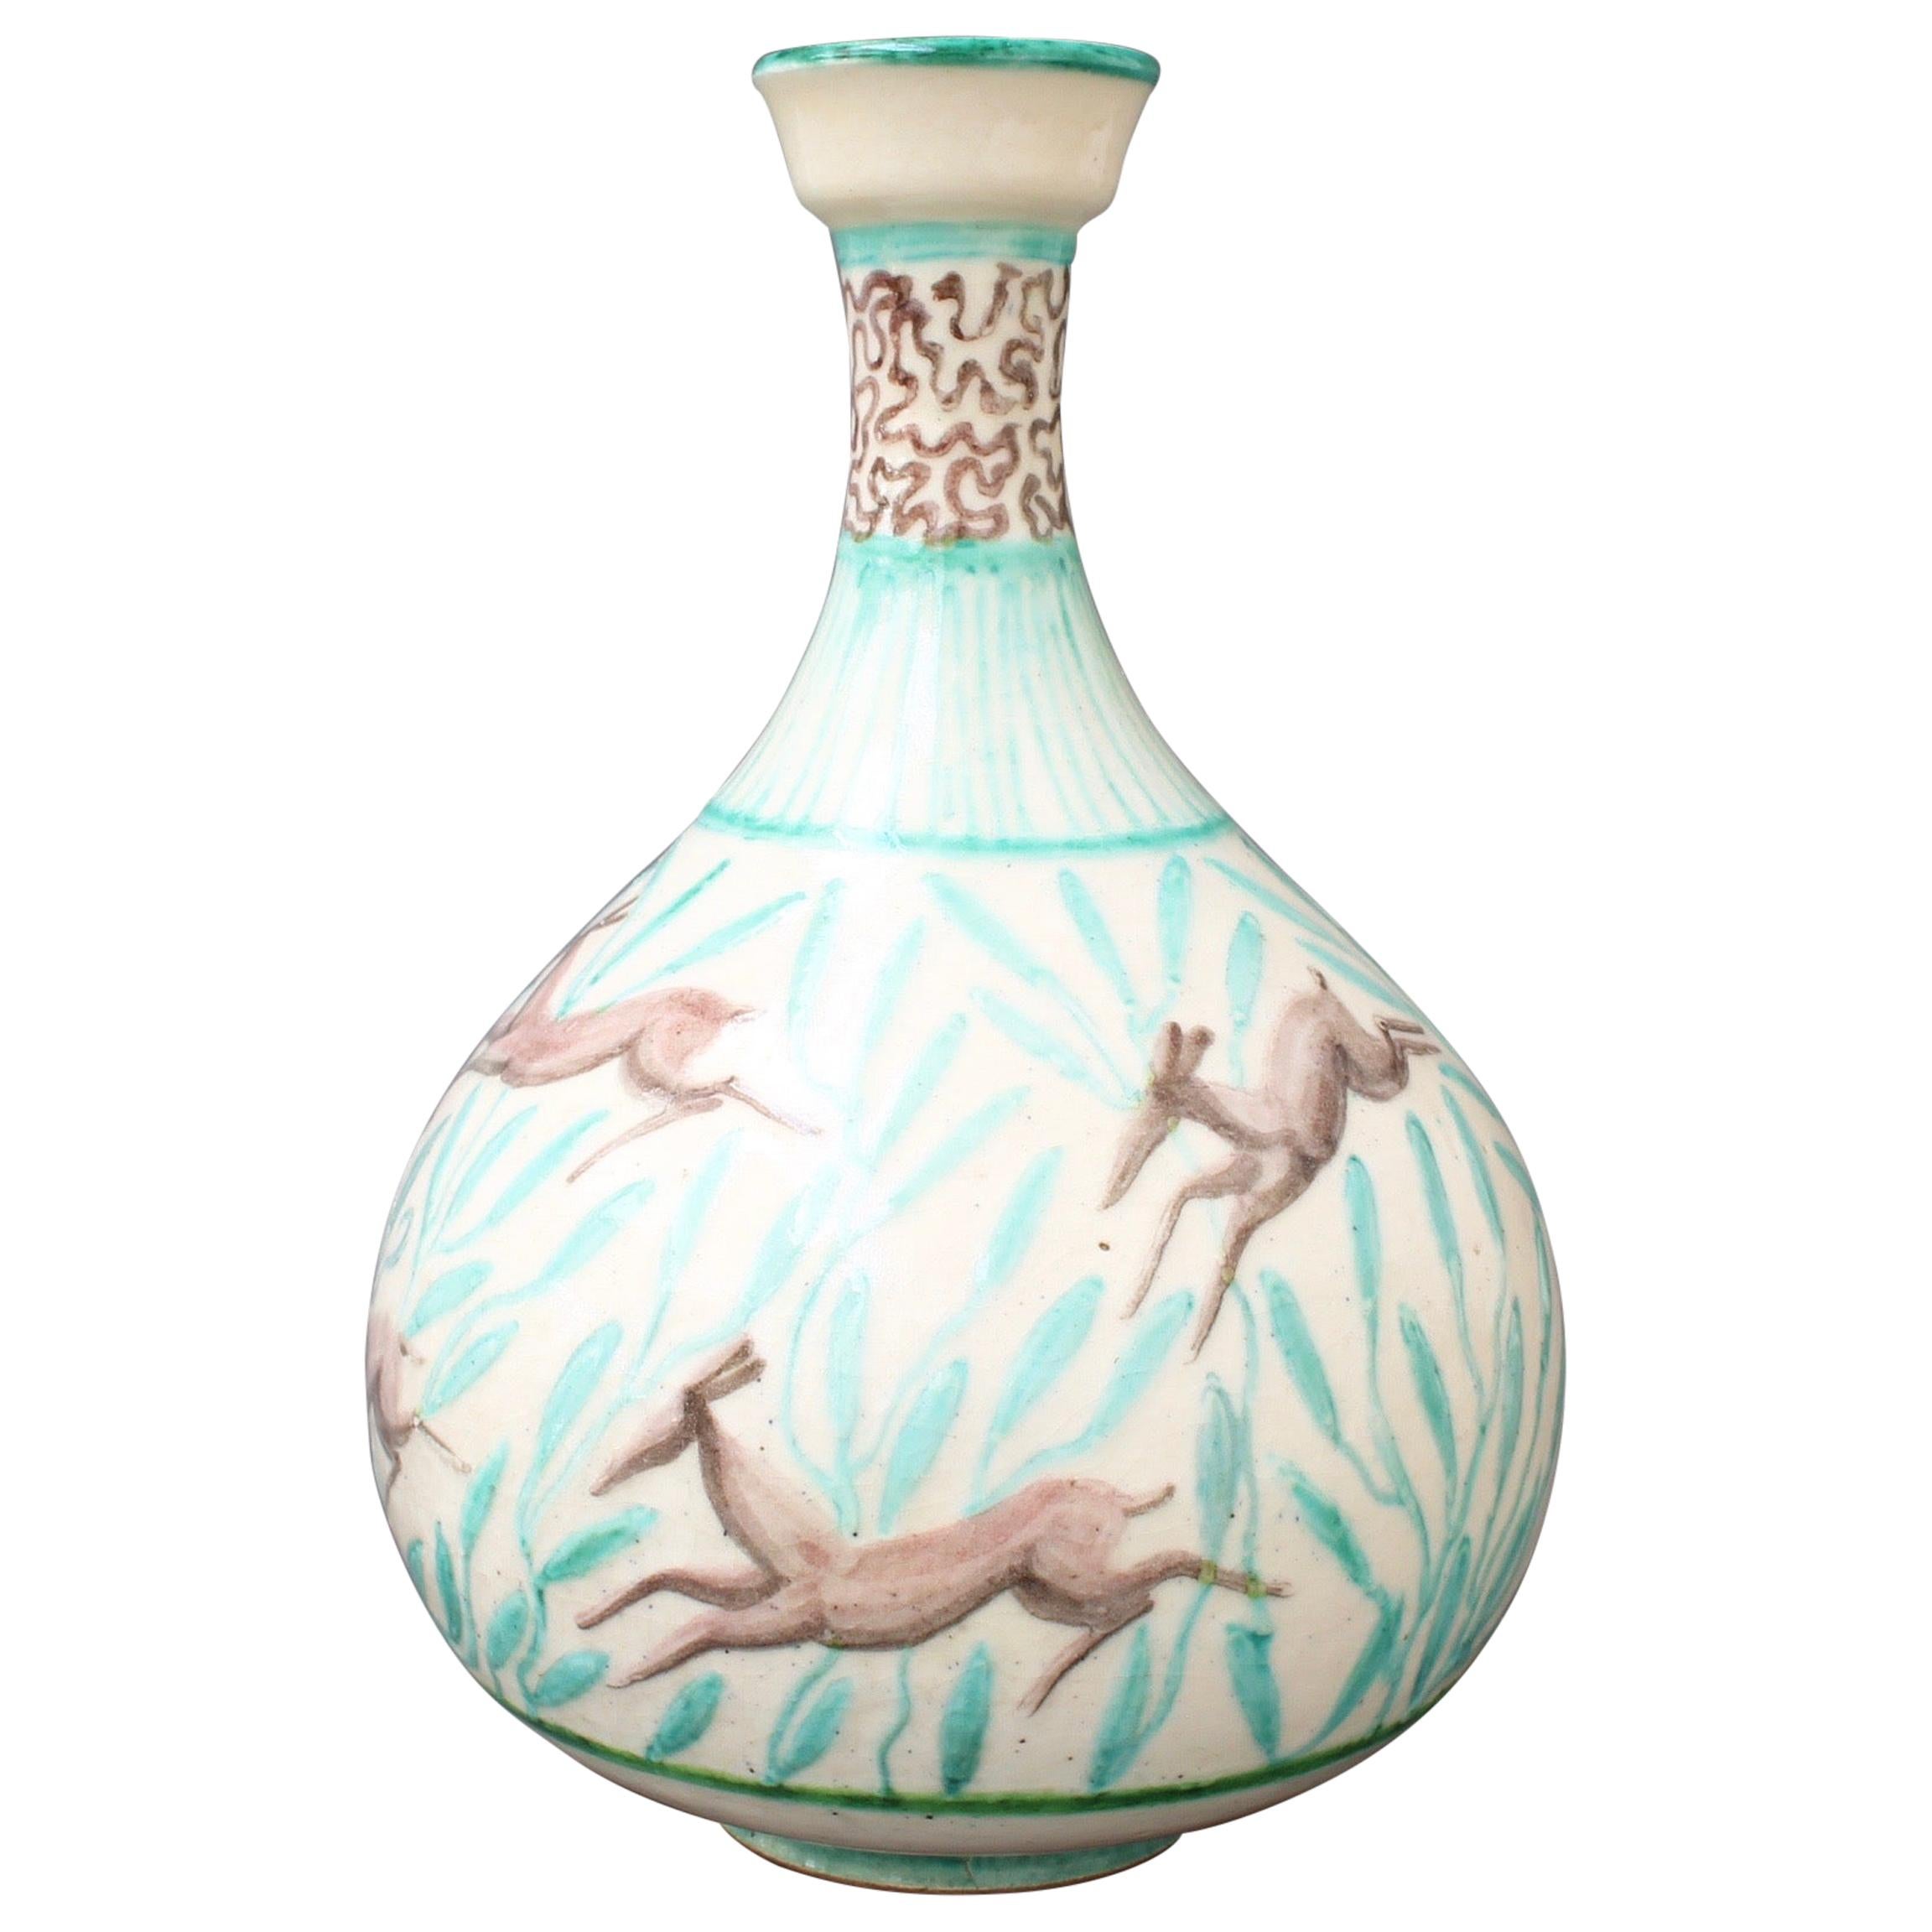 Vintage Ceramic Flower Vase by Jean Mayodon, circa 1960s